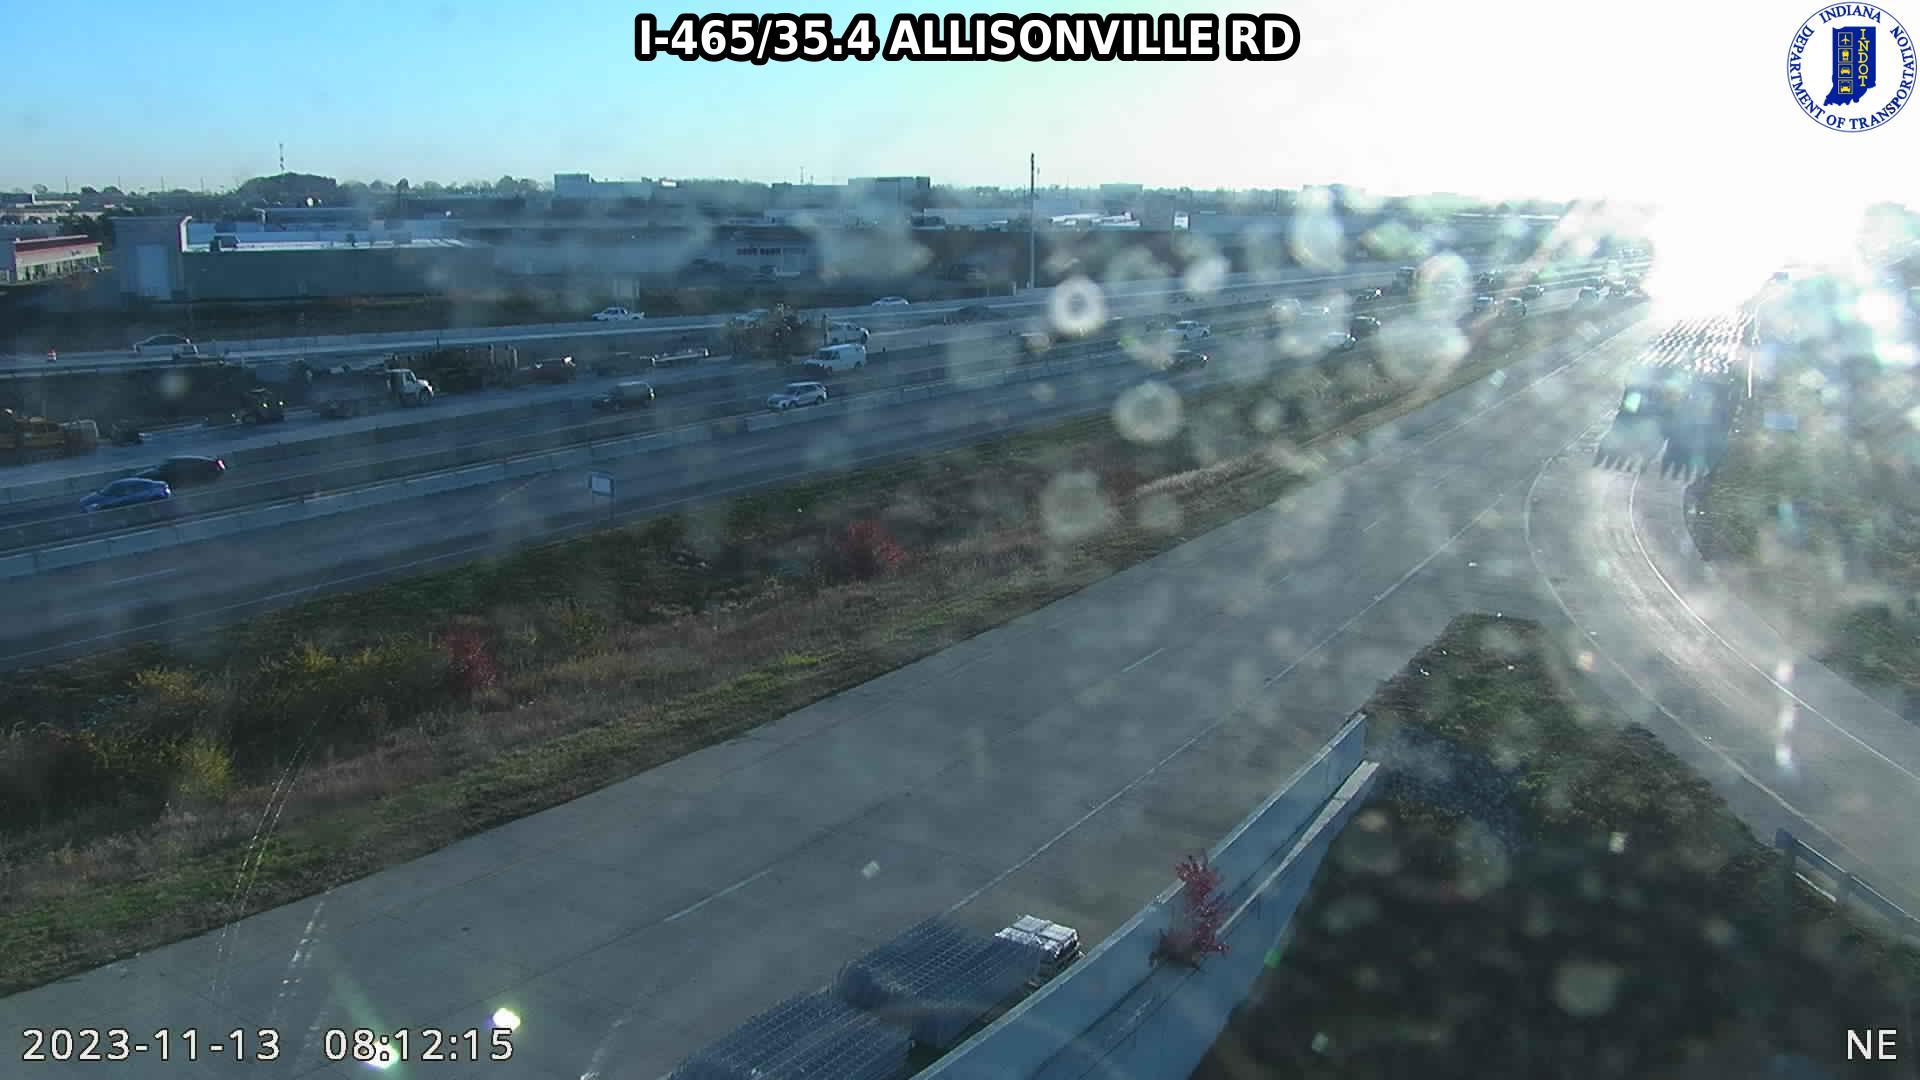 Traffic Cam Allisonville: I-465: I-465/35.4 - RD Player